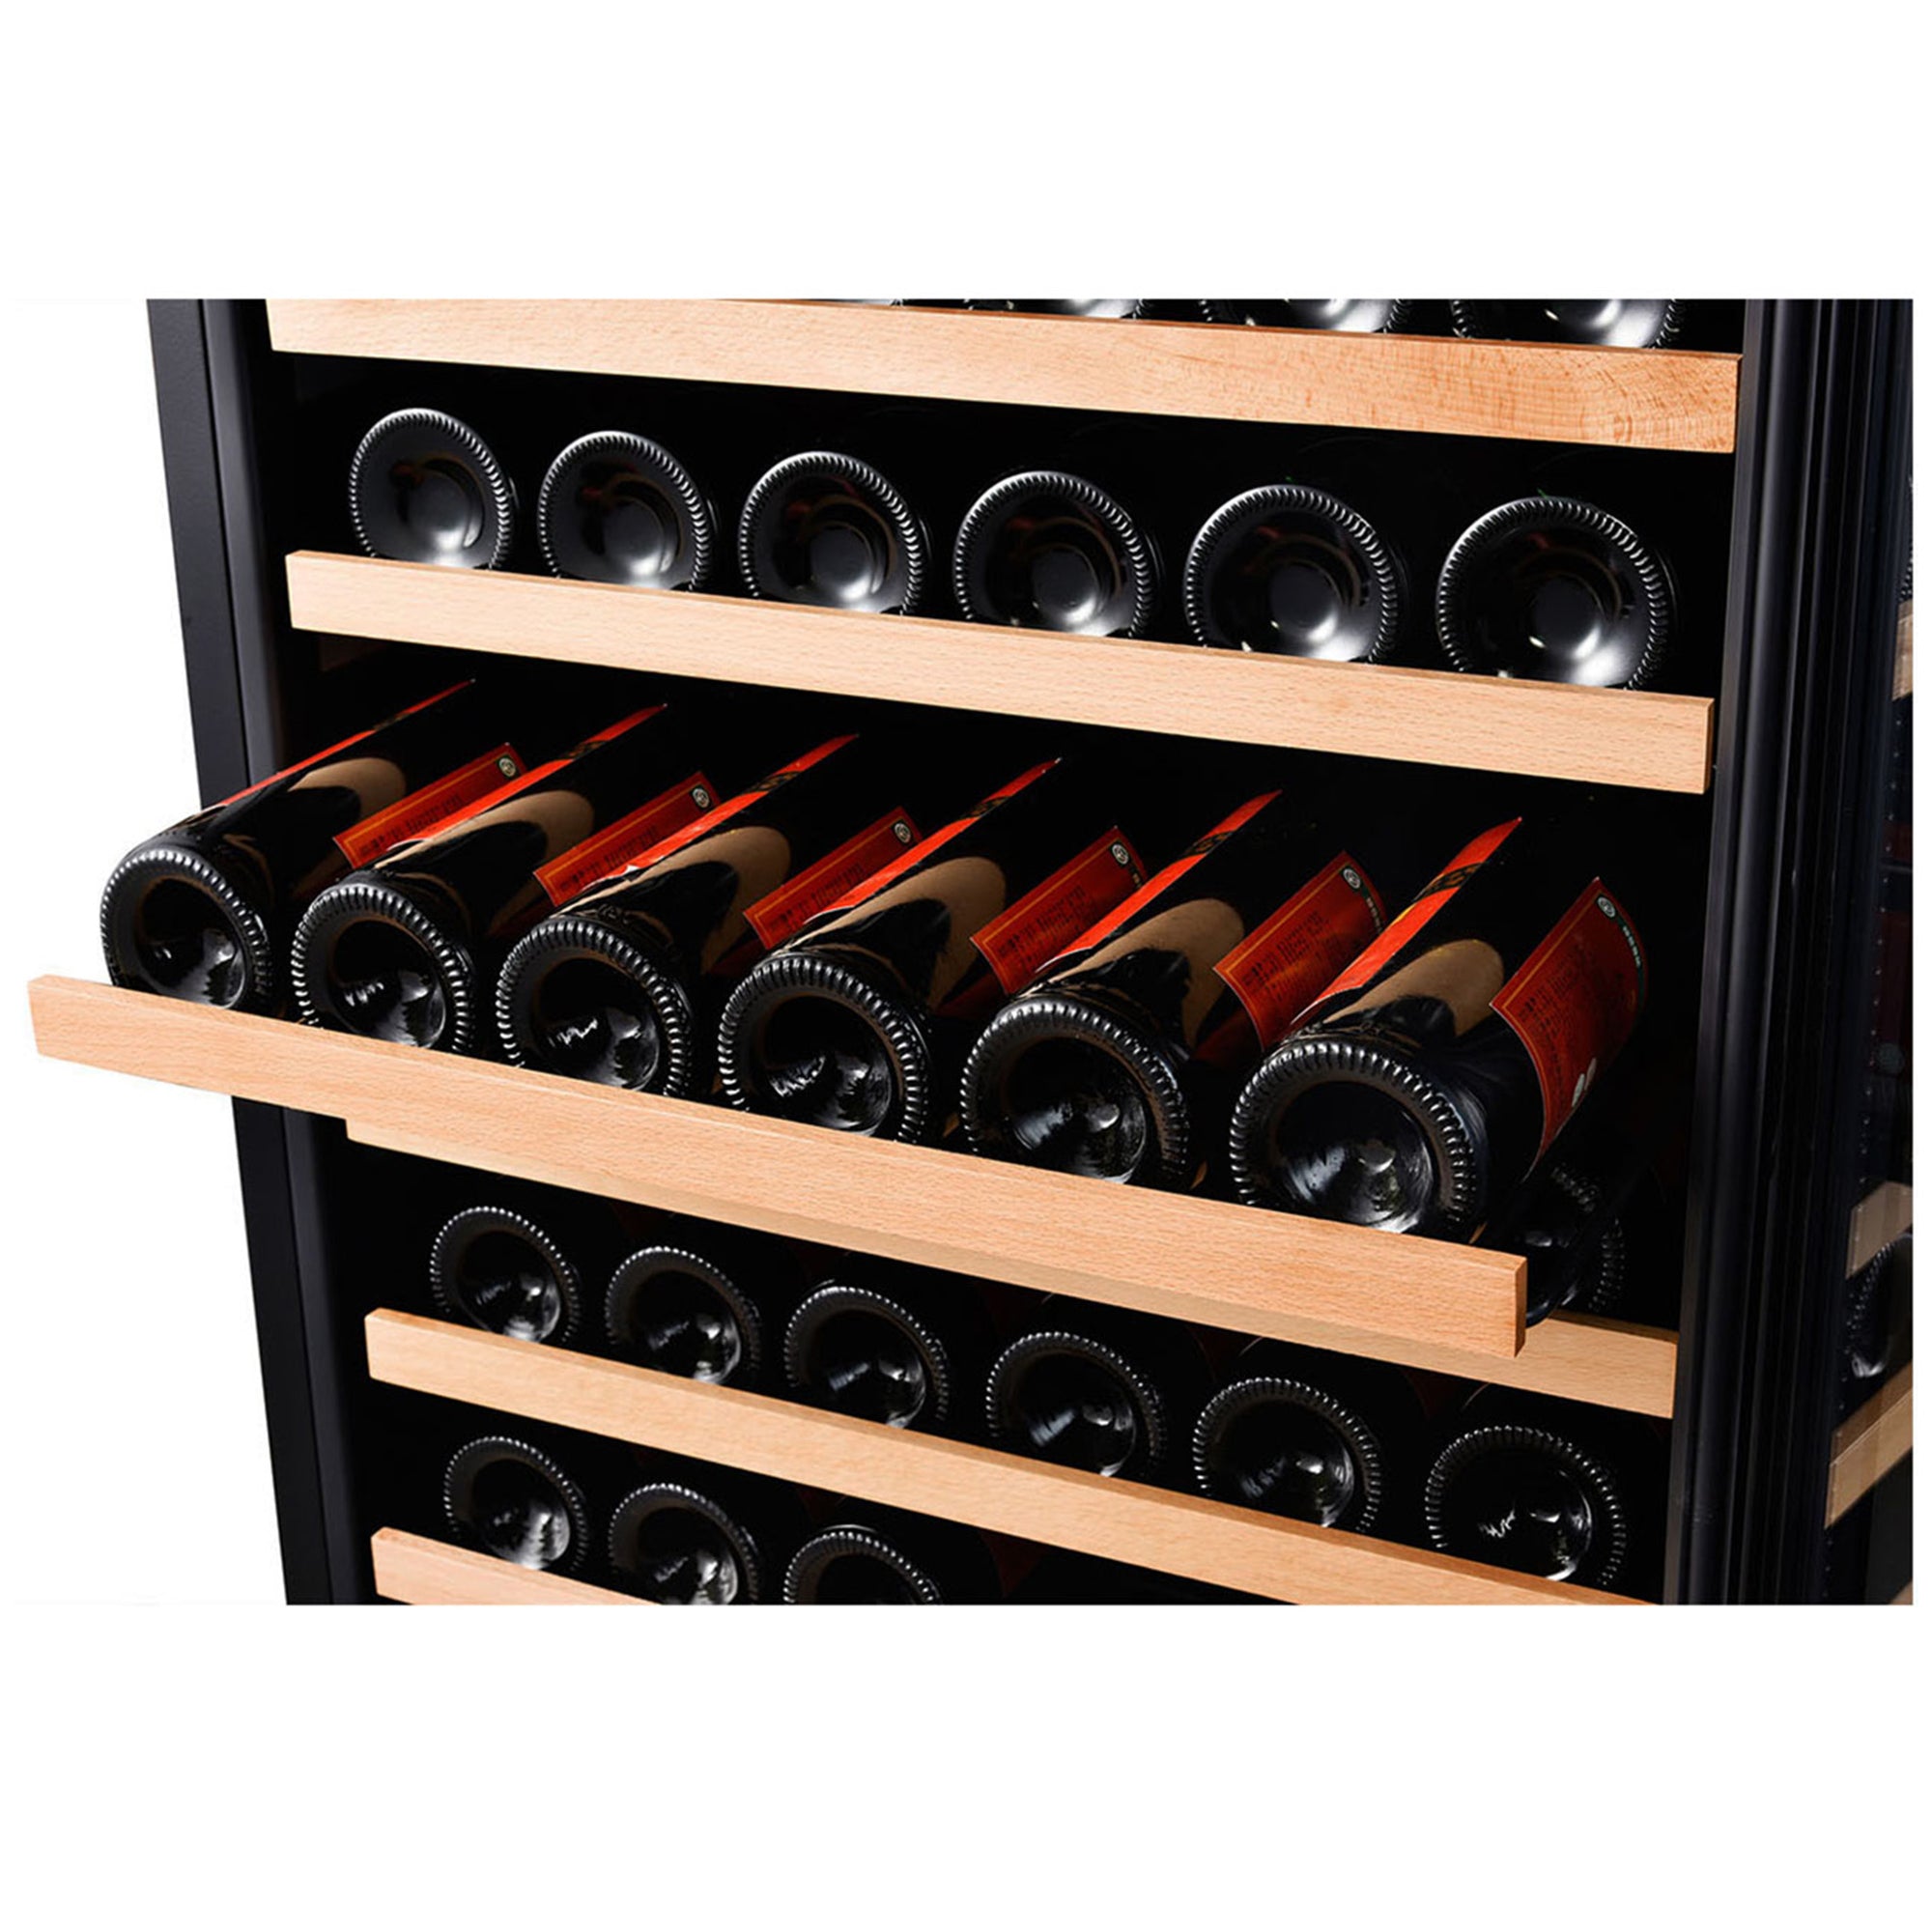 166 Bottle Dual Zone Stainless Steel Wine Refrigerator